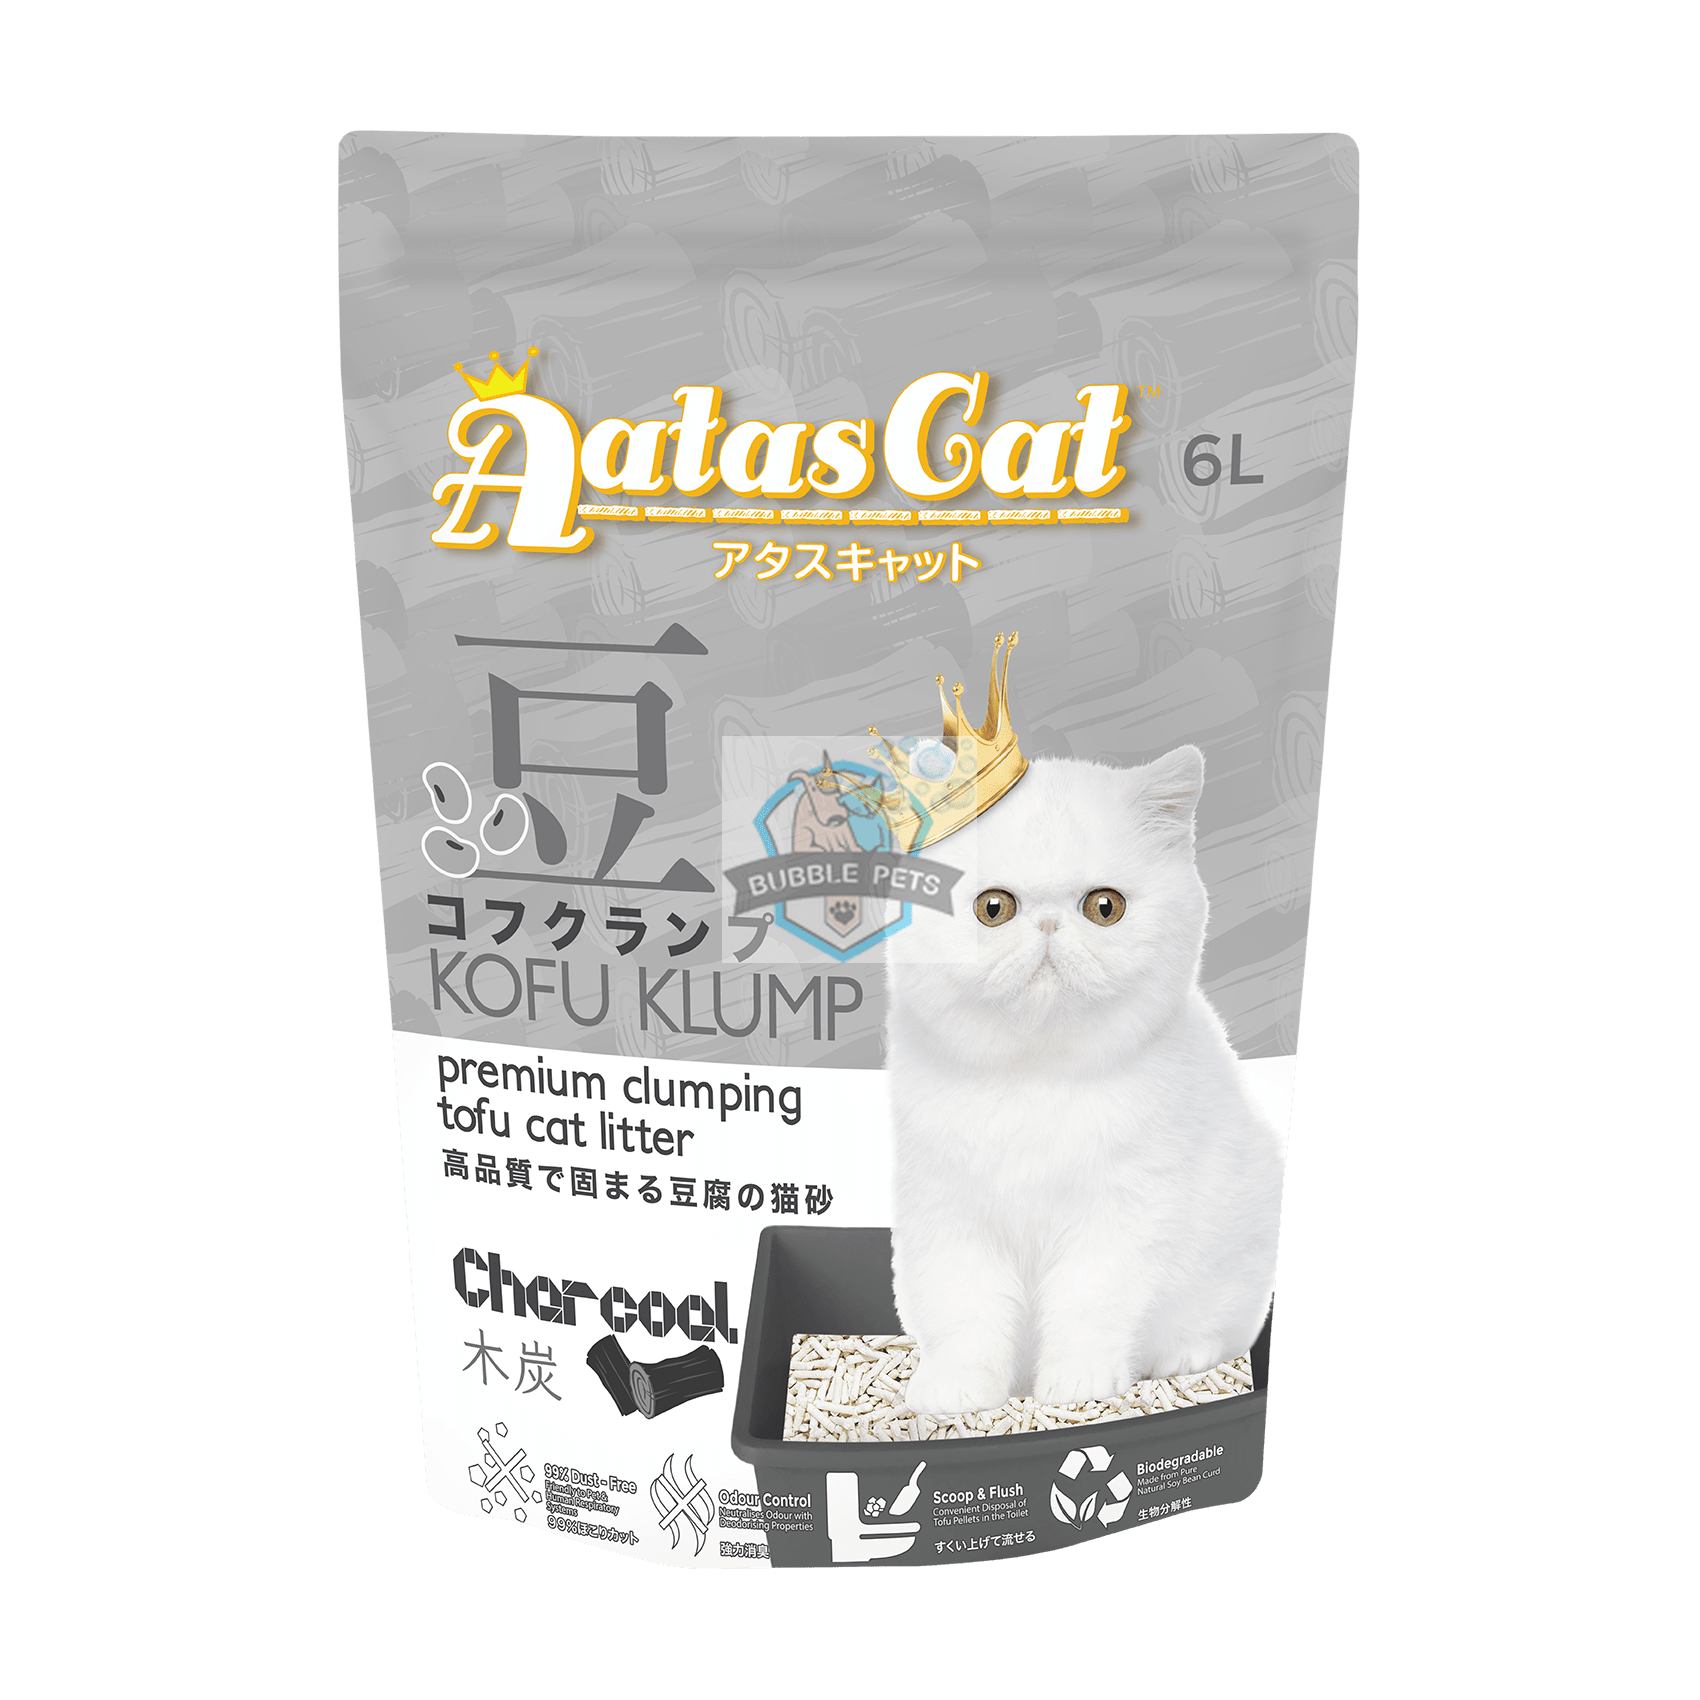 Aatas Cat Kofu Klump Tofu Cat Litter Charcoal 6L